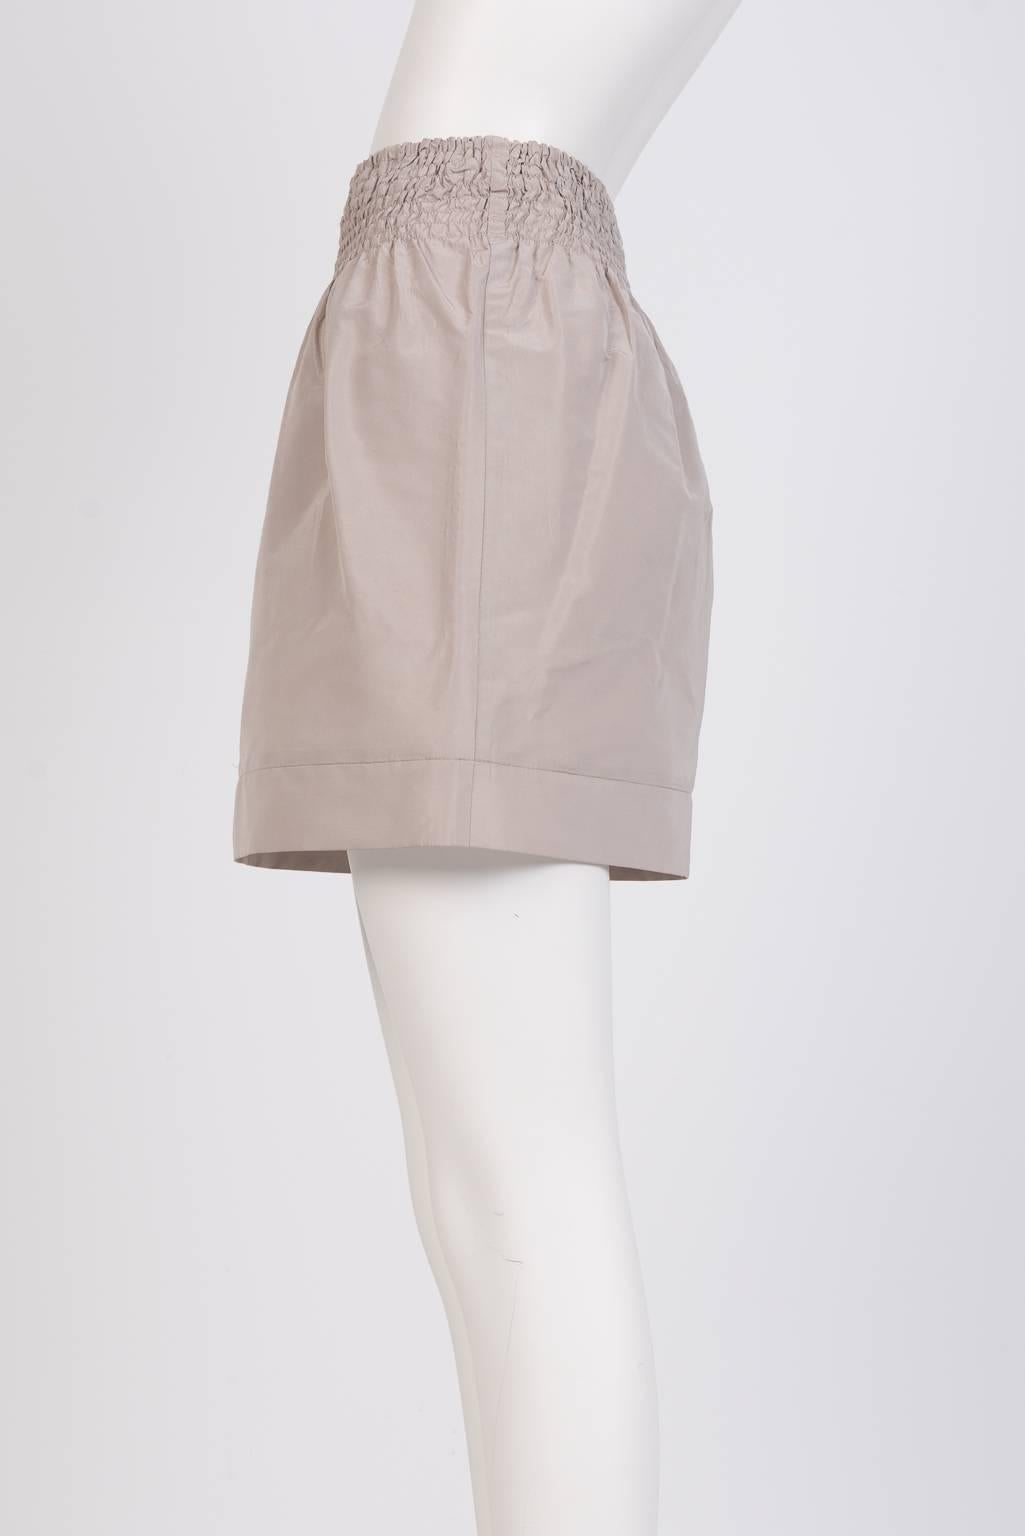 Gray Miu Miu Technical Fabric Short Skirt For Sale